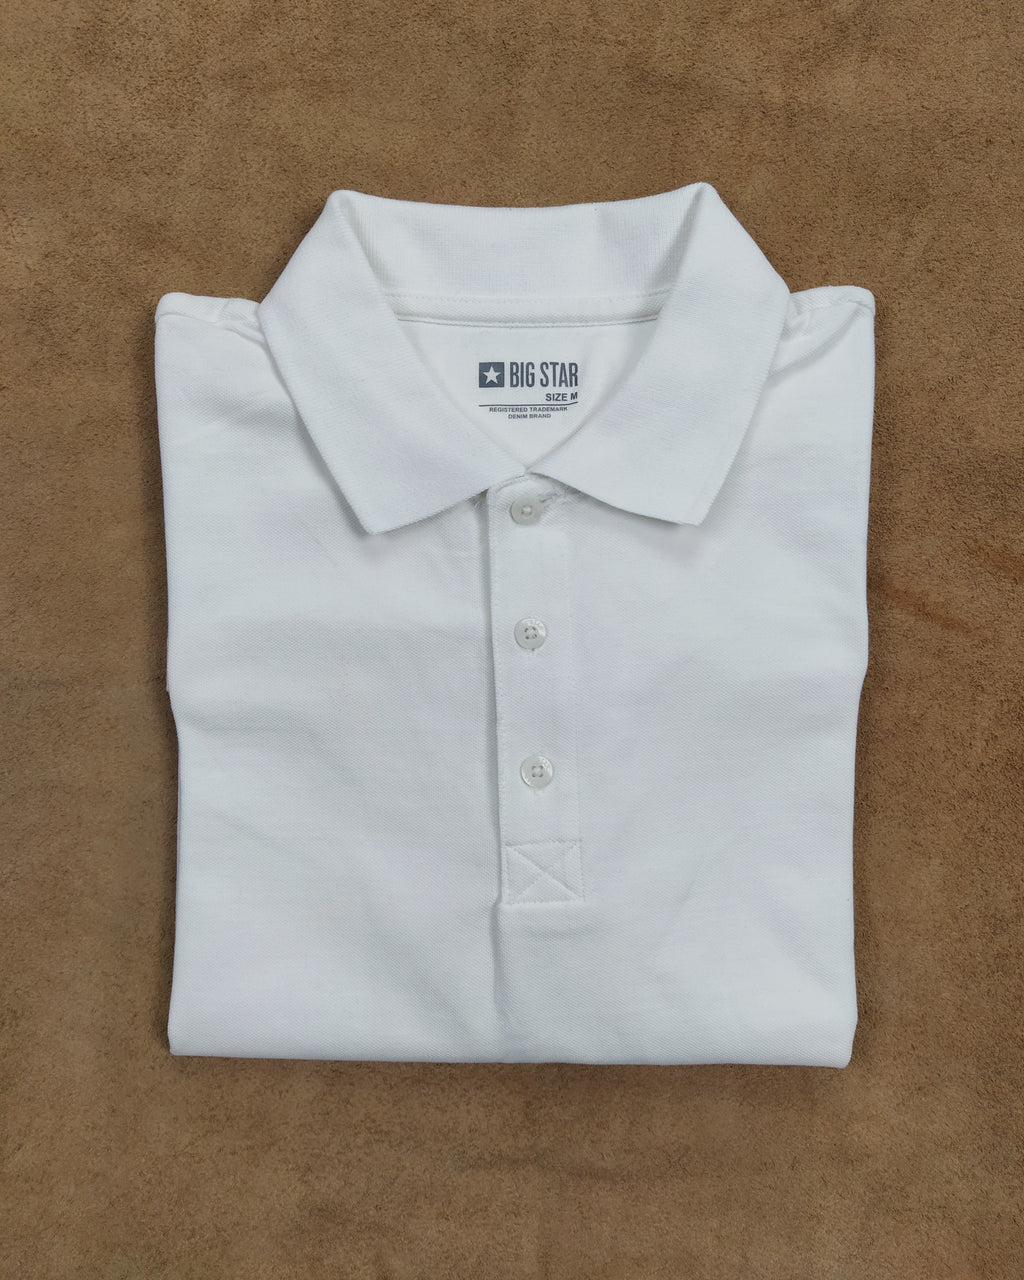 Big Star Men's Polo Shirt Fashion Casual Sport Clothing Collar